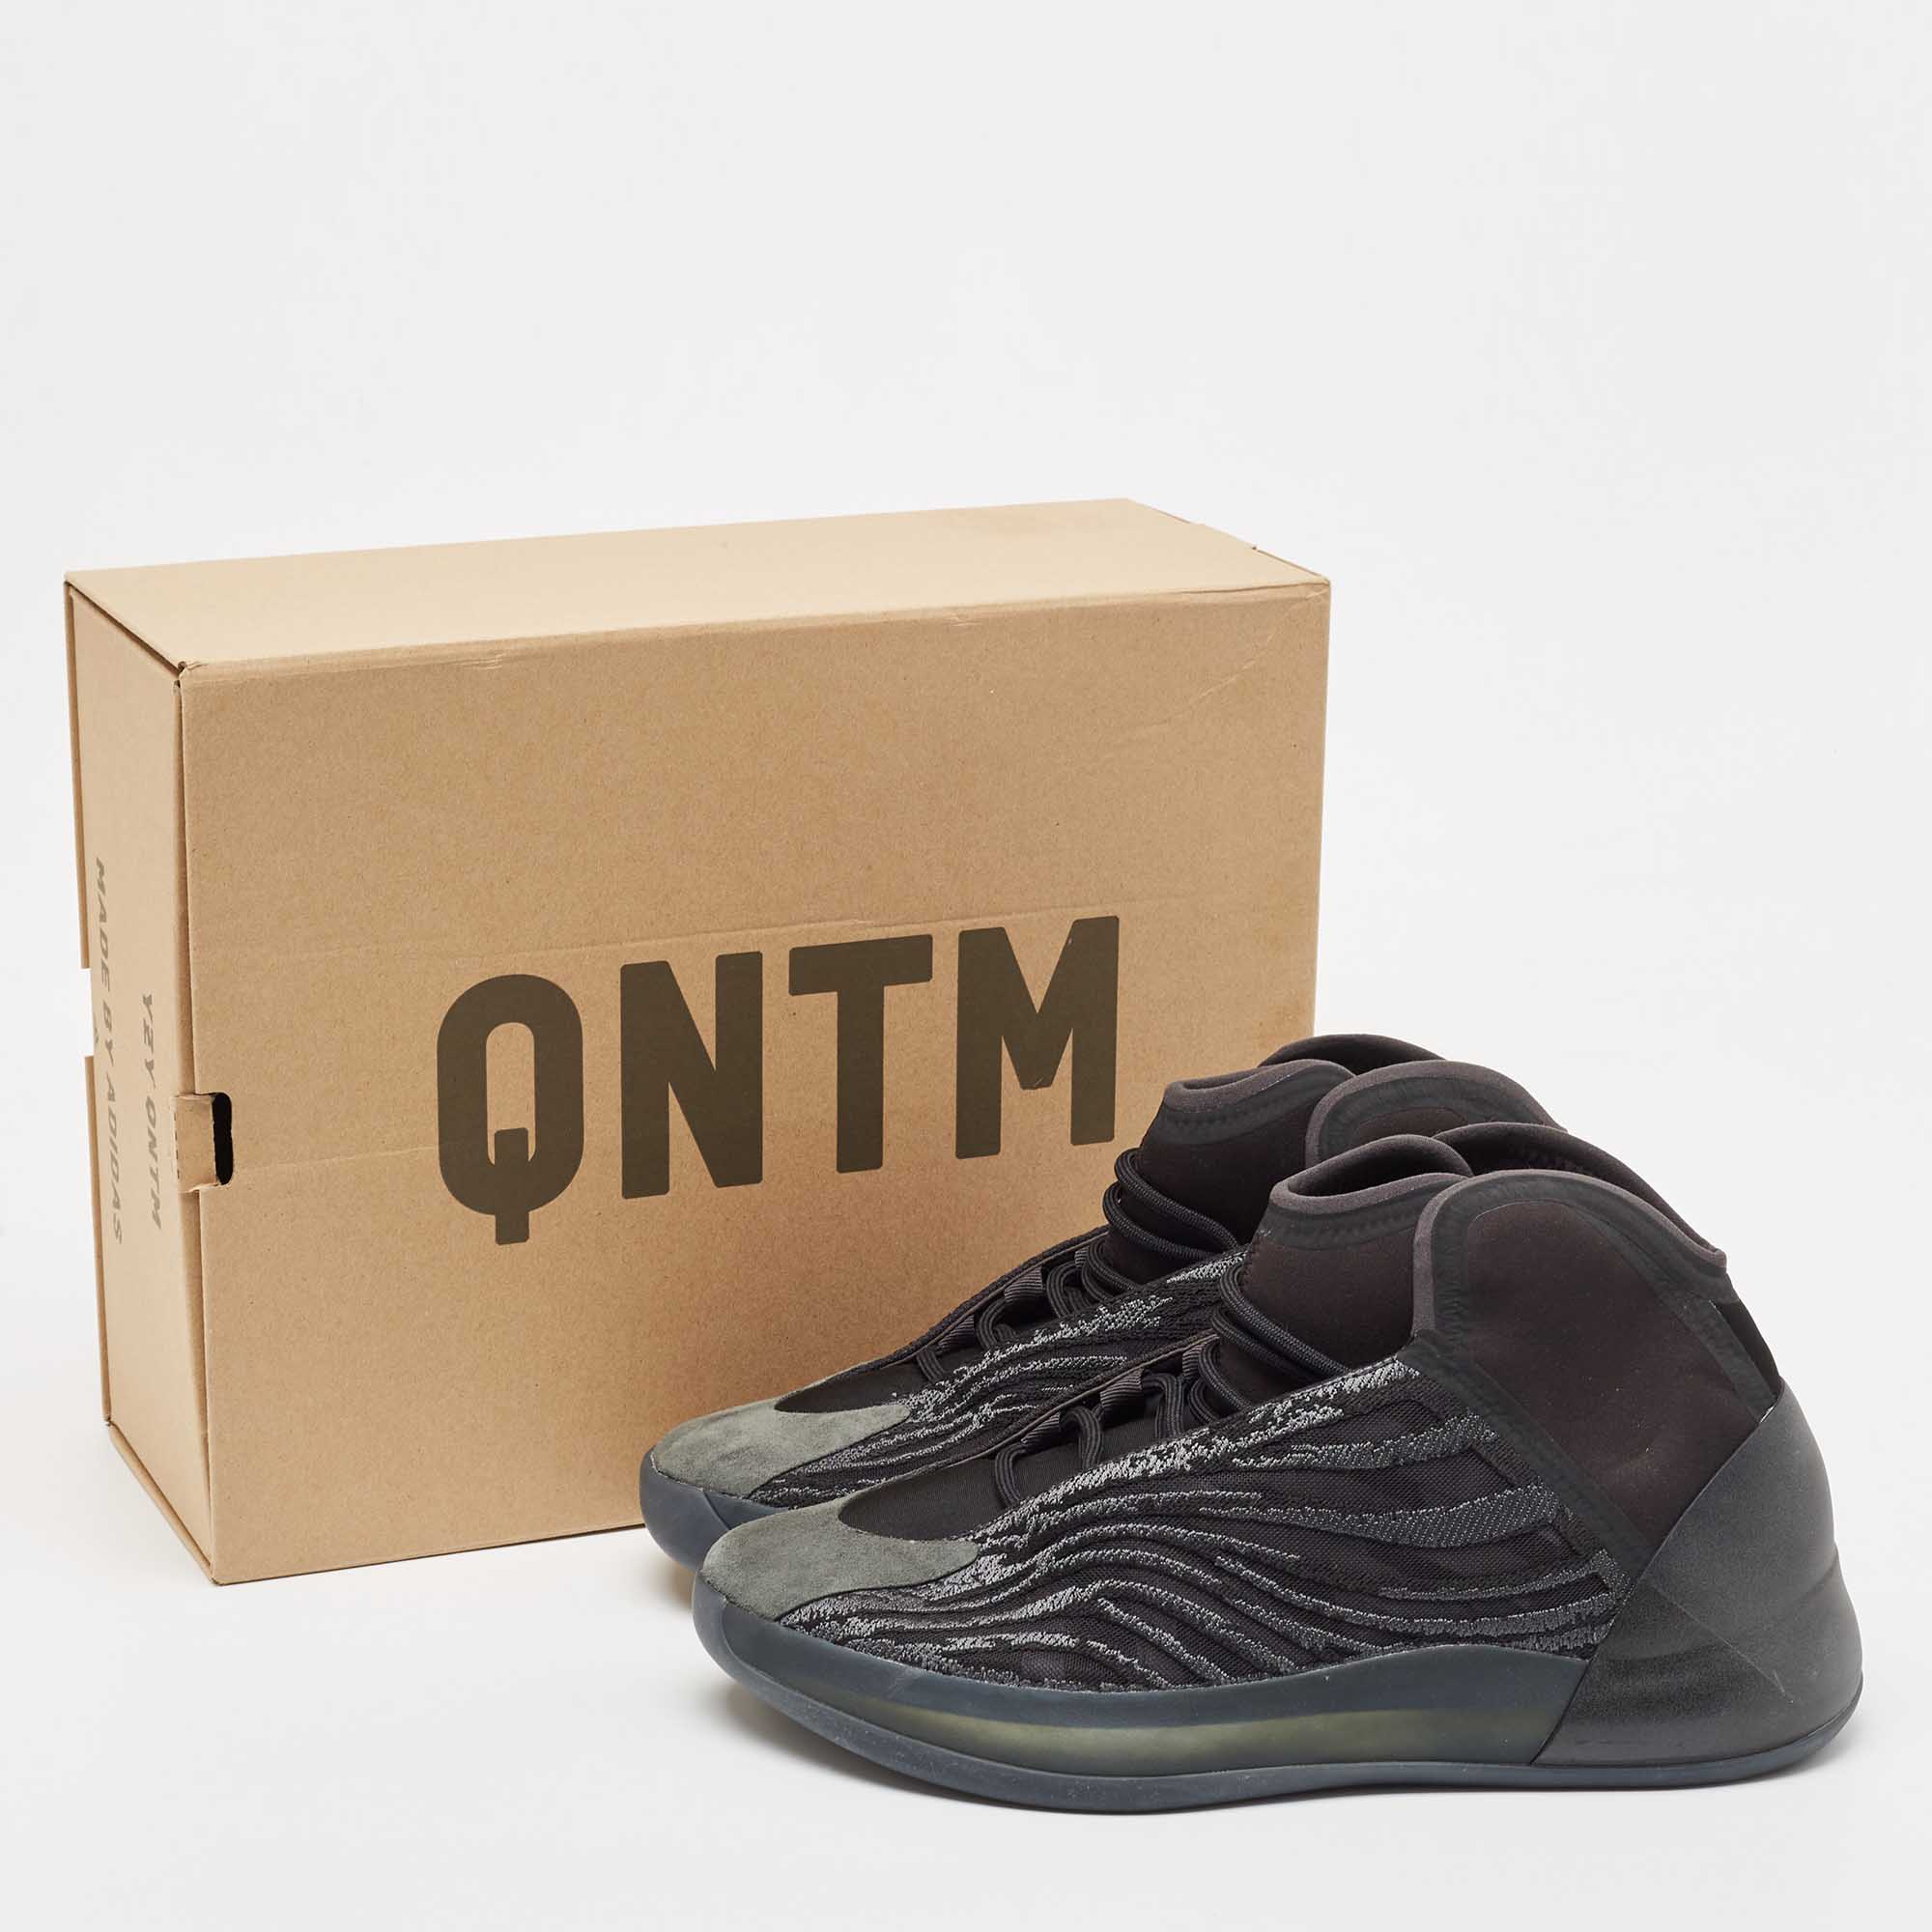 Yeezy X Adidas Black Mesh And Neoprene QNTM Onyx Sneakers Size 47 1/3